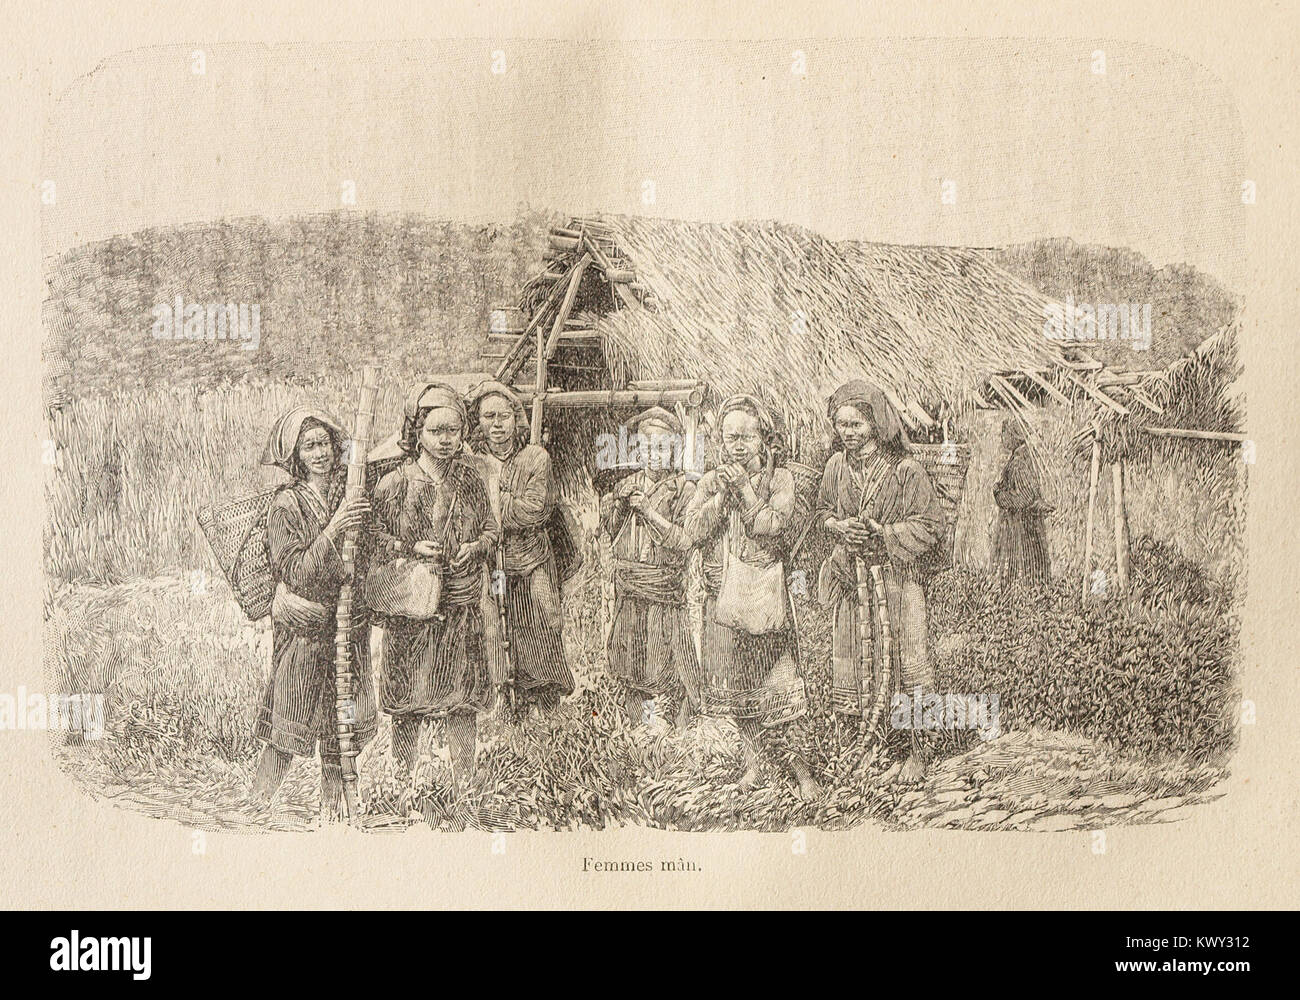 L. Girod-Dix Ans de Haut-Tonkin-1899 - Femmes mân Stockfoto